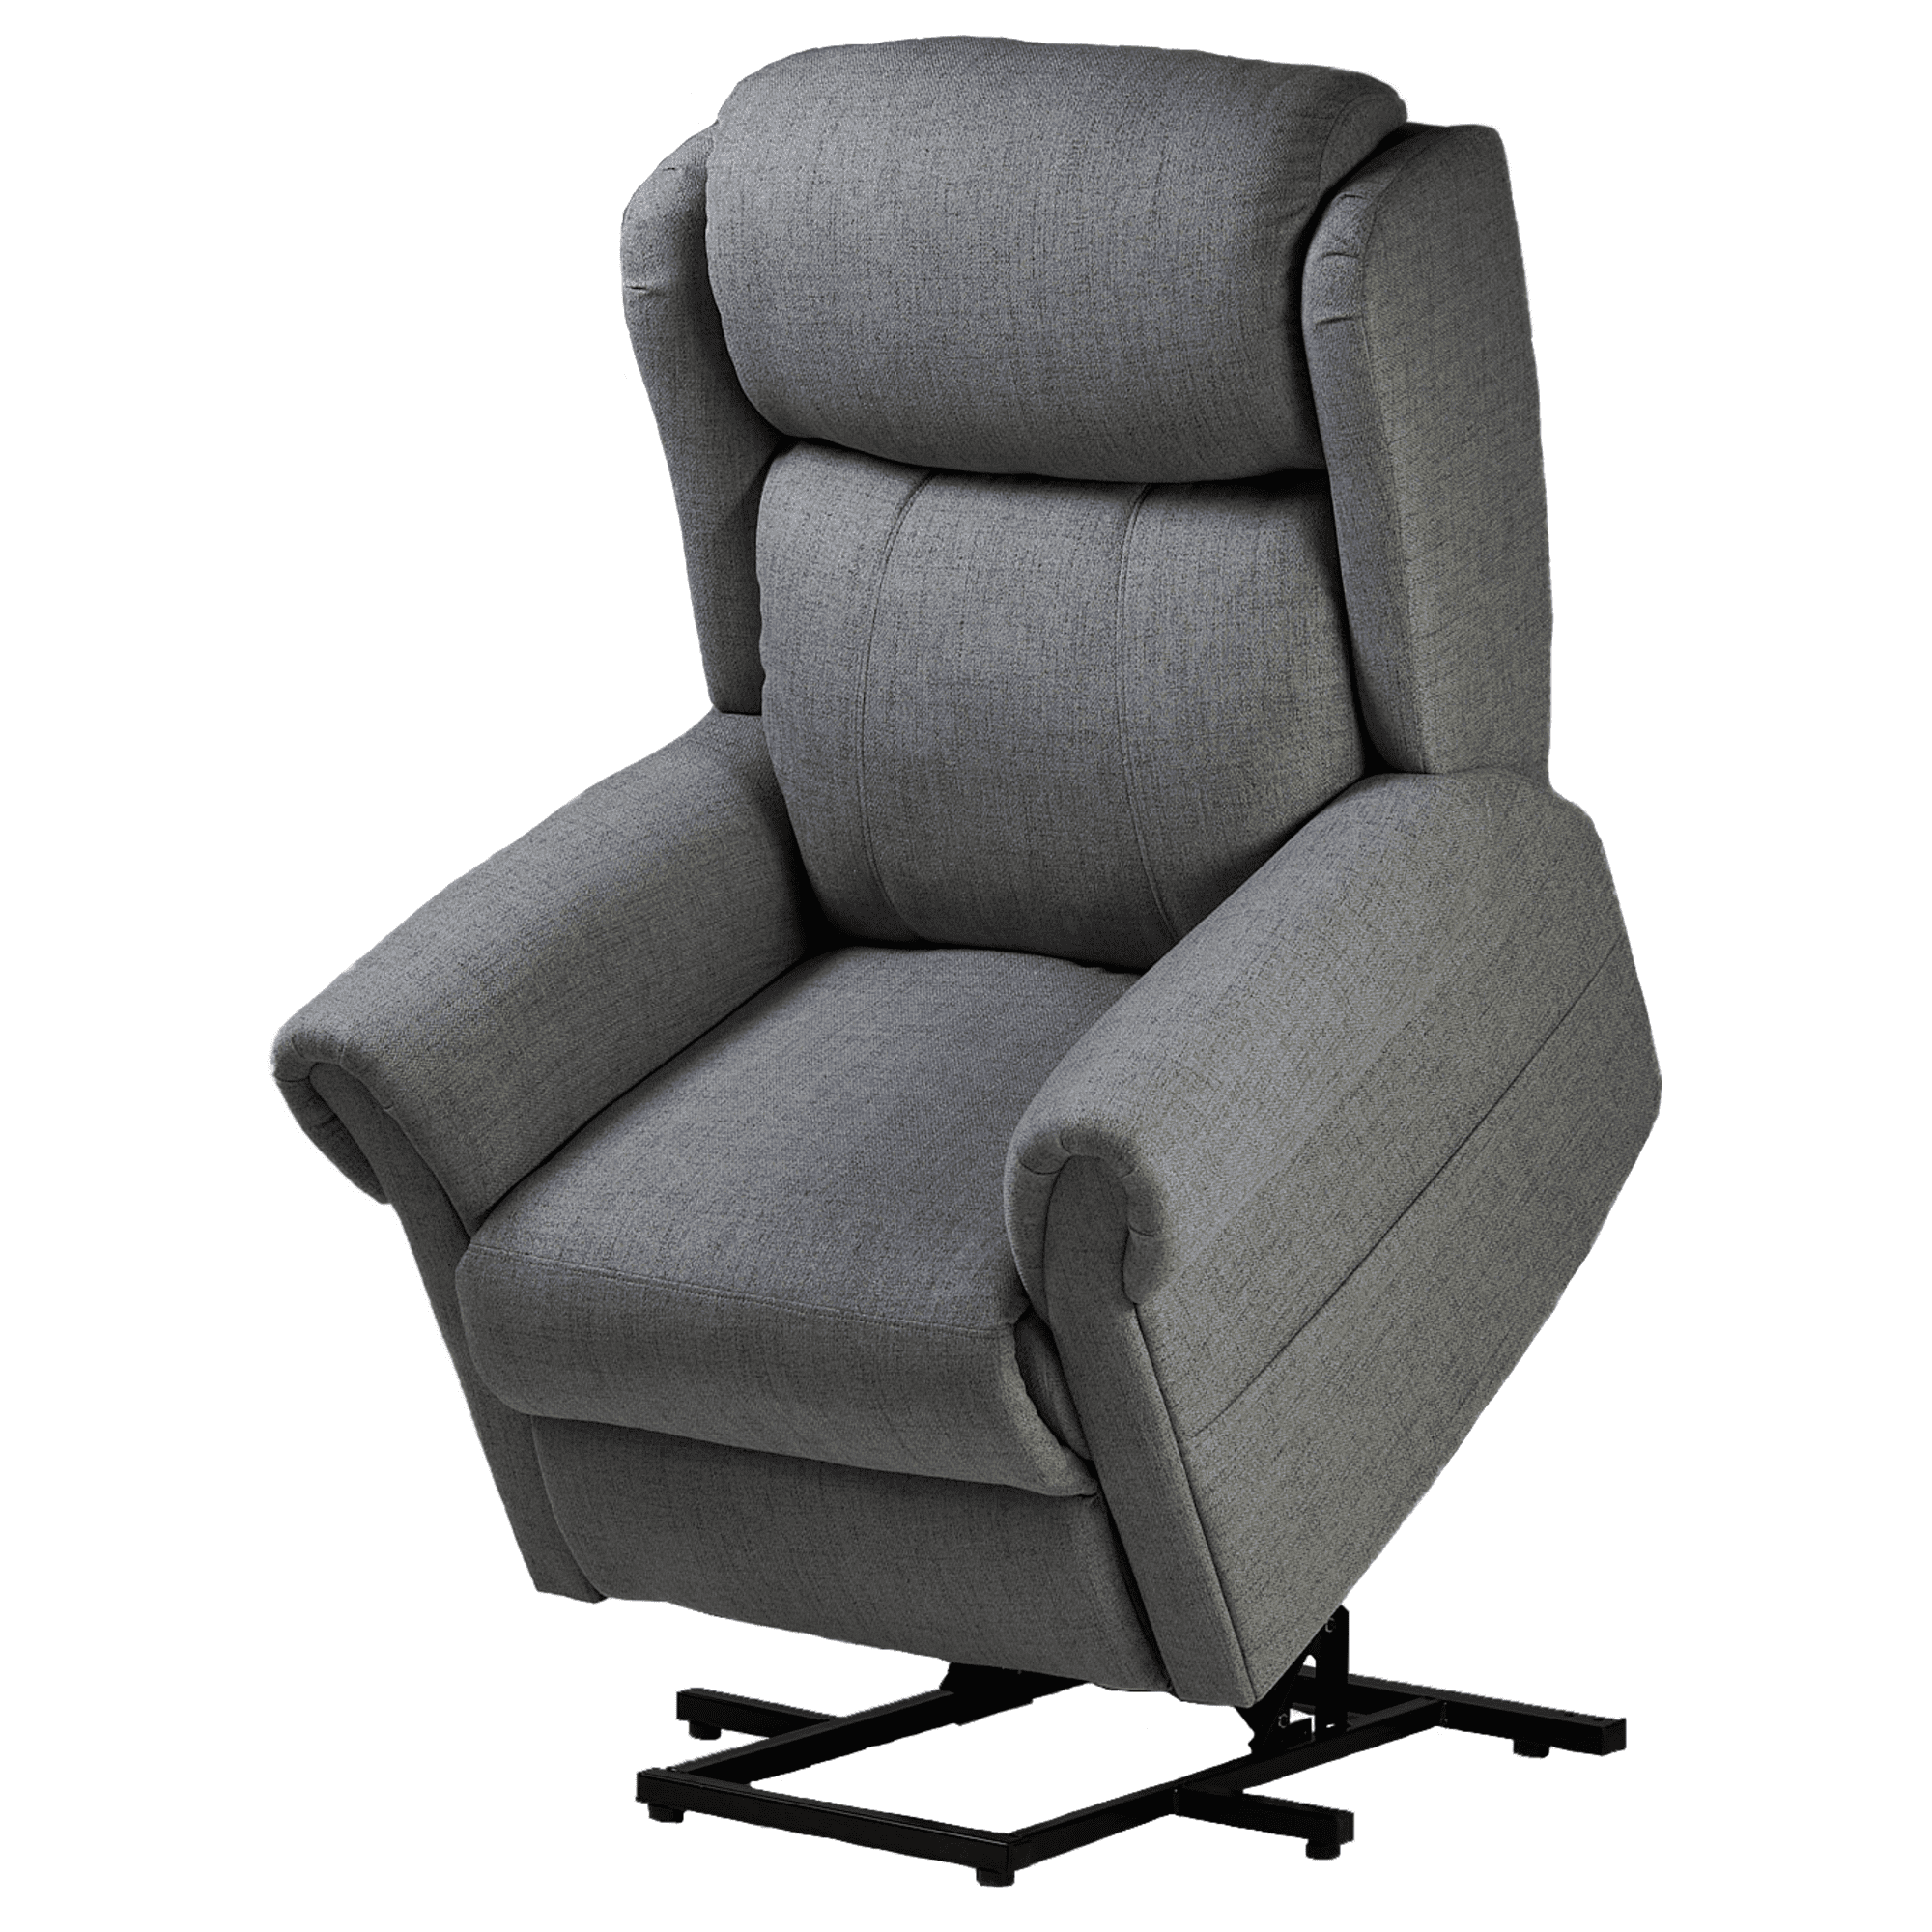 SonderCare Essence Lift Chair Product Page Tilt Position Featured (1)